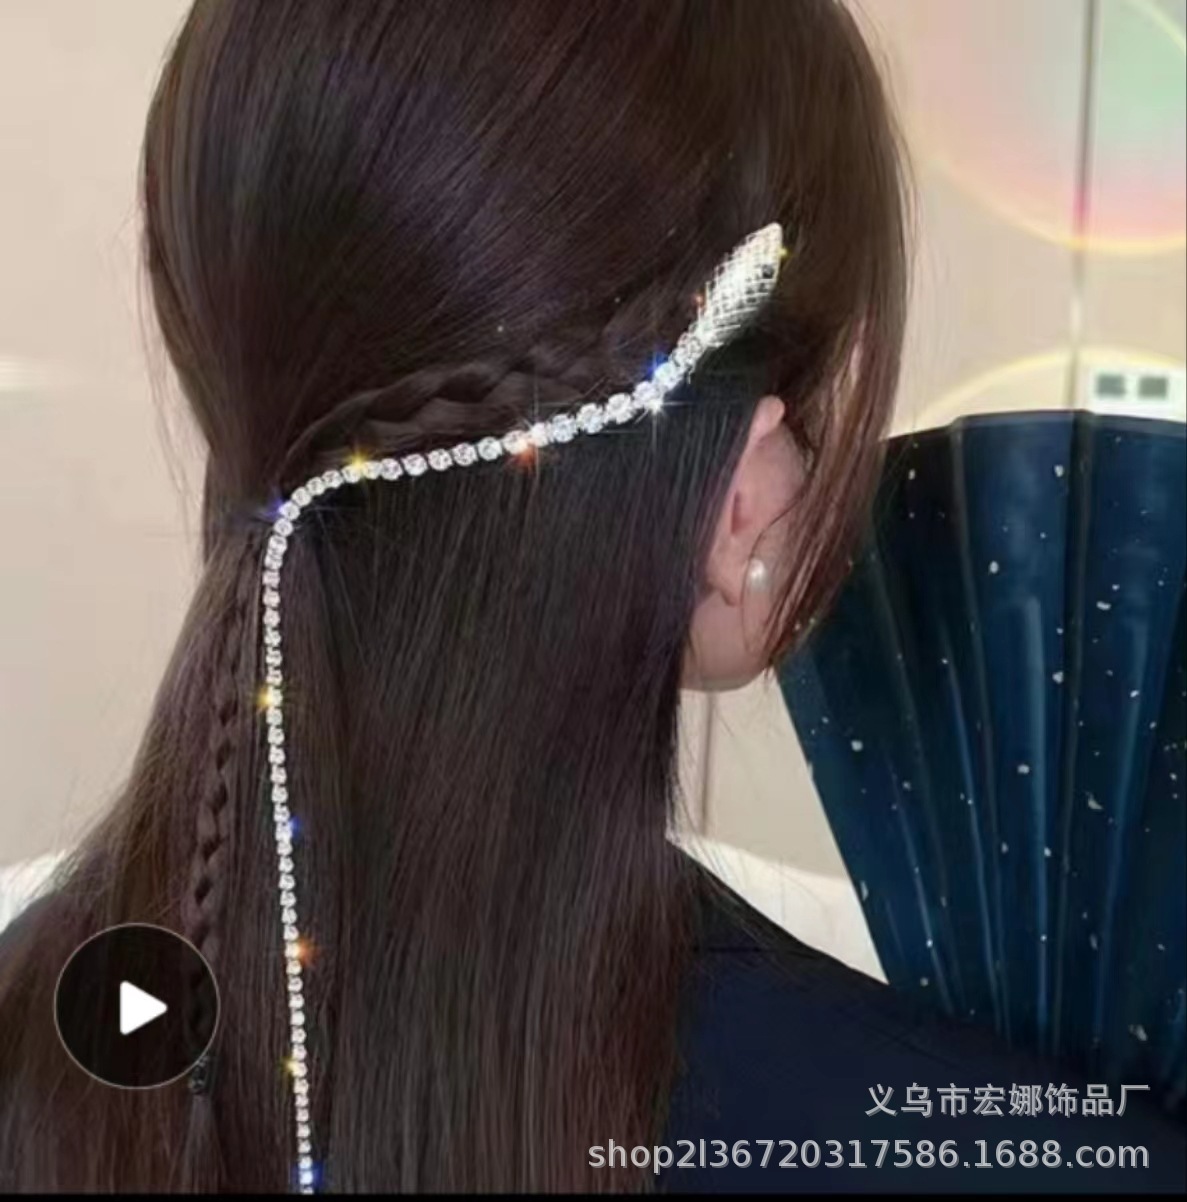 Snake-Shaped Barrettes 2022 New Rhinestone Tassel Hair Accessories Personality Trend Women's Headdress Fashion Zodiac Rhinestone Hair Chain